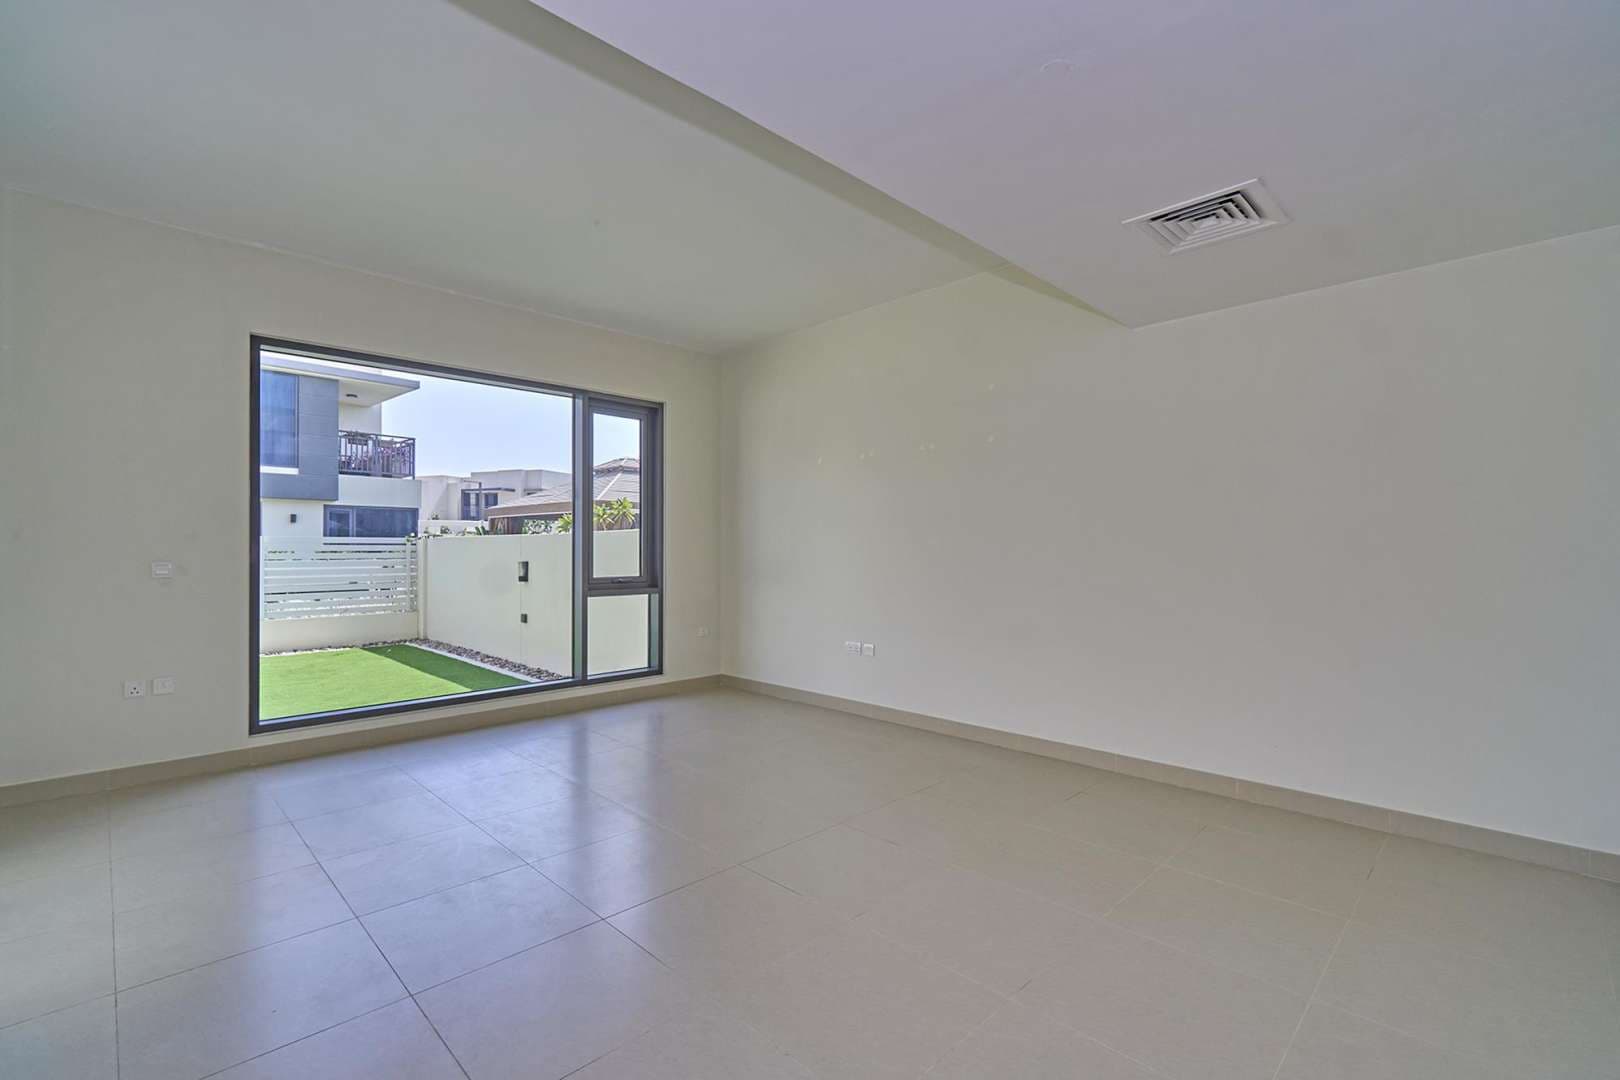 3 Bedroom Townhouse For Rent Maple At Dubai Hills Estate Lp06754 1f159cbe2a3ceb00.jpg